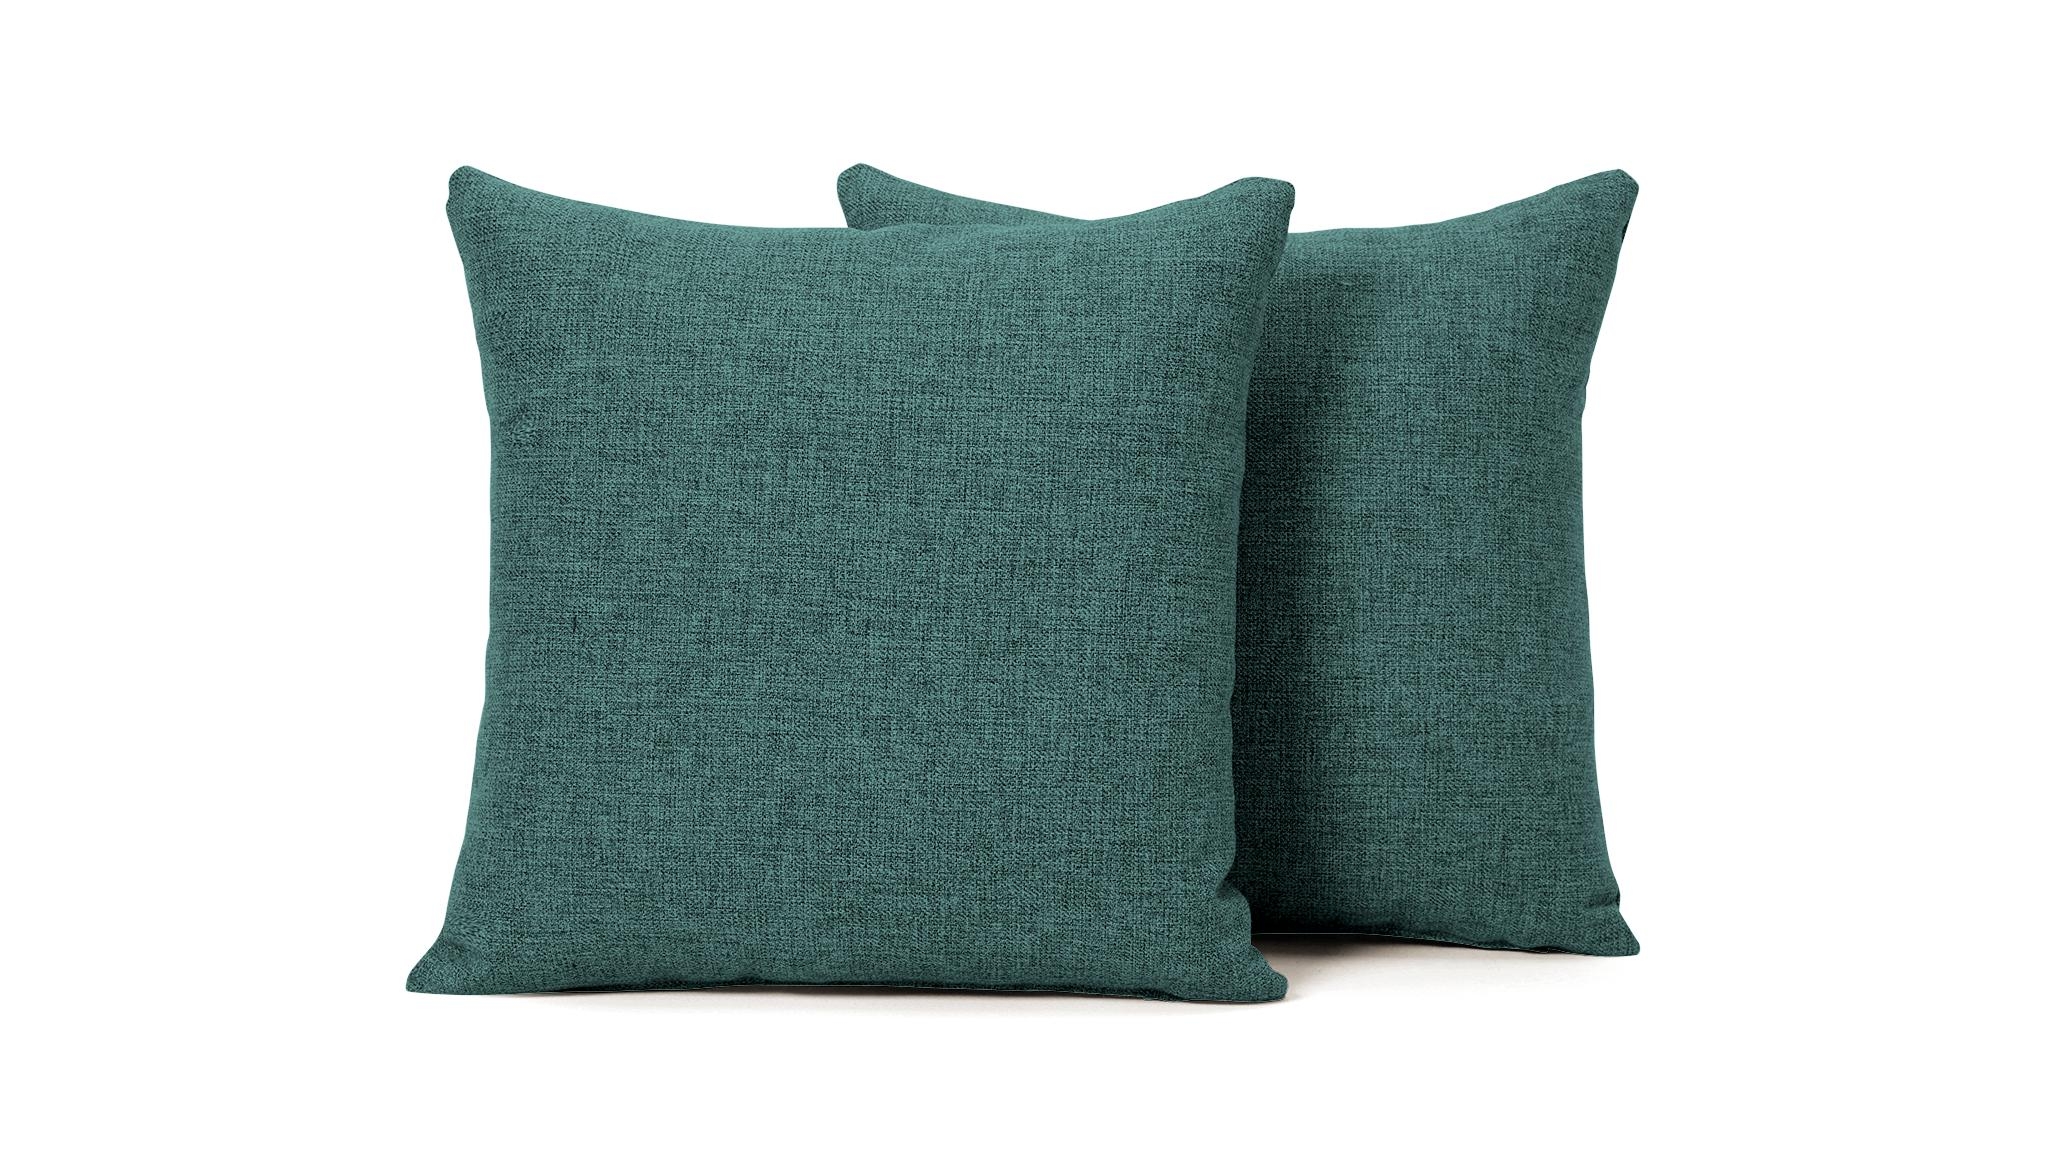 Green Decorative Mid Century Modern Knife Edge Pillows 18 x 18 (Set of 2) - Essence Aqua - Image 0